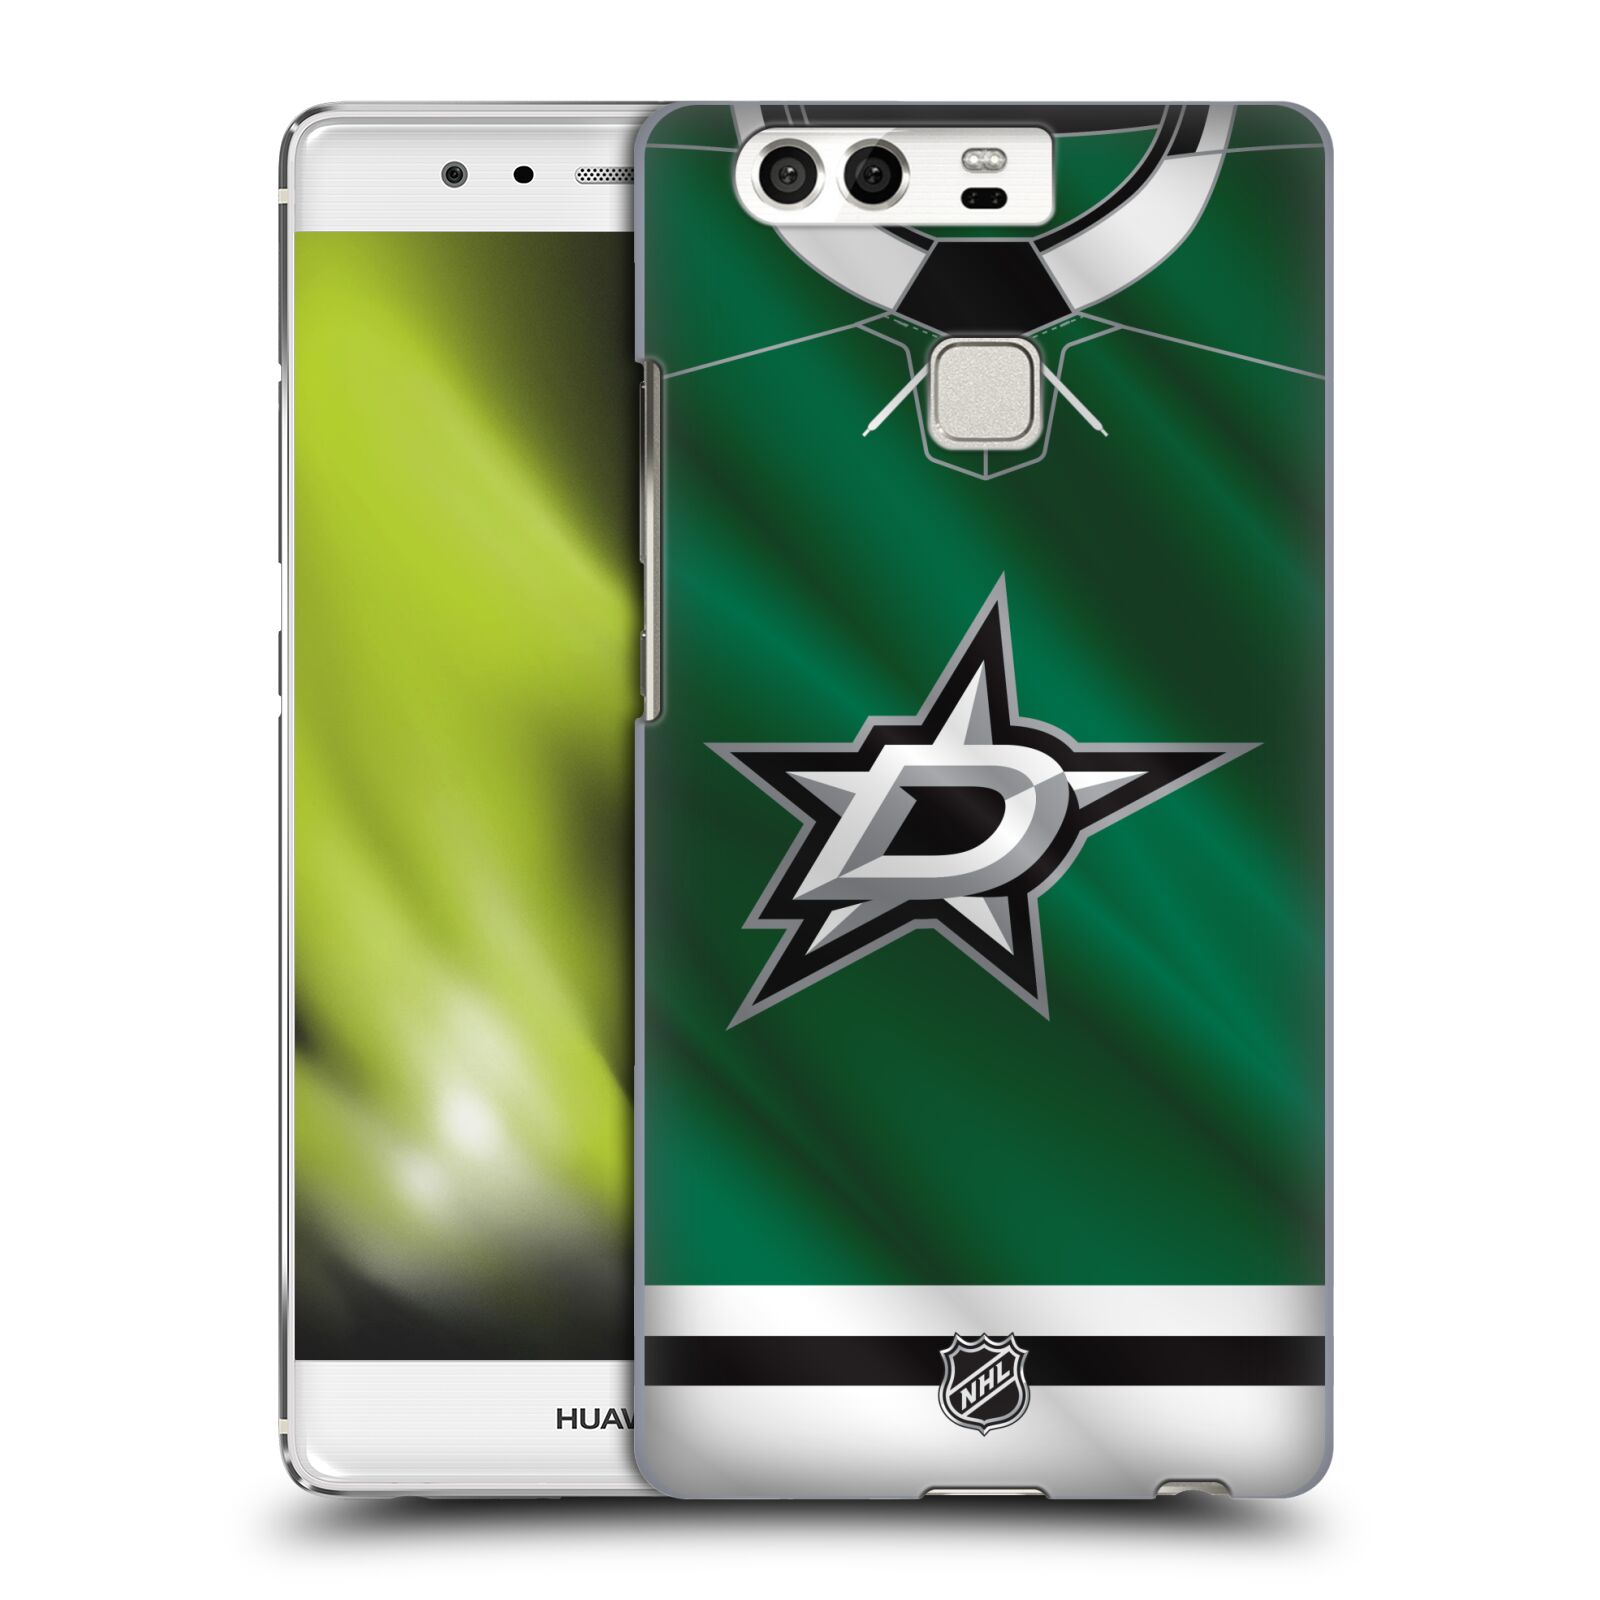 Pouzdro na mobil Huawei P9 / P9 DUAL SIM - HEAD CASE - Hokej NHL - Dallas Stars - Dres